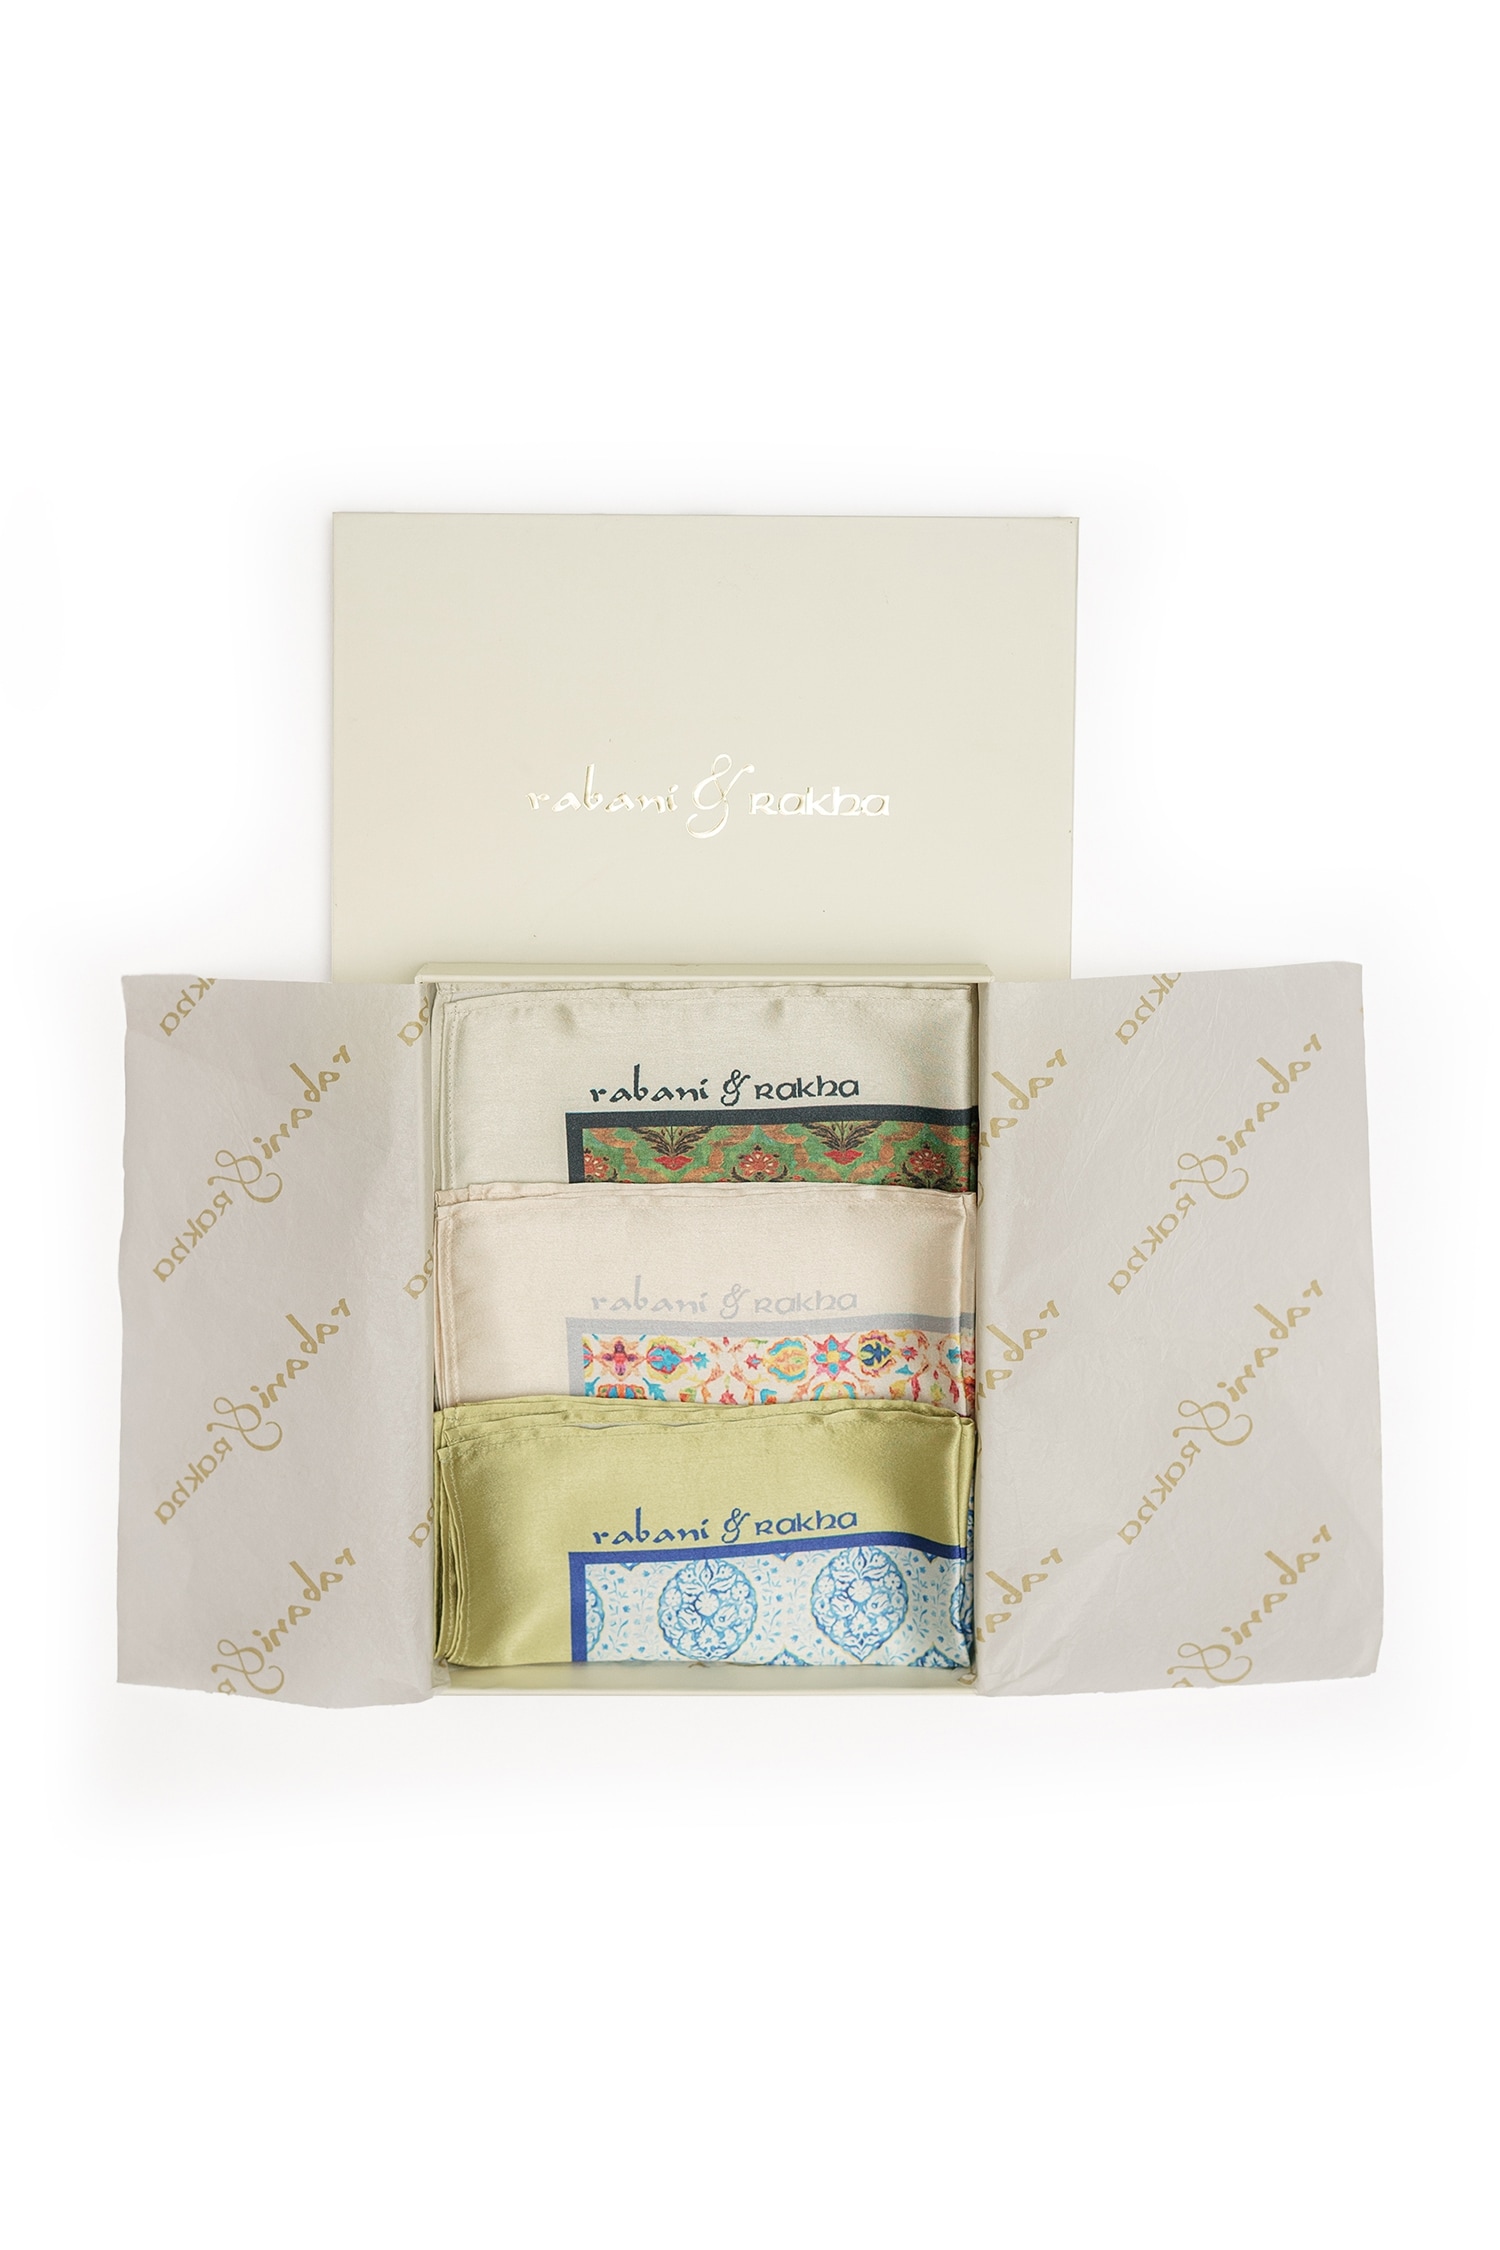 Rabani & Rakha Multi Color Printed Floral Satin Pocket Square Gift Box - Set Of 3